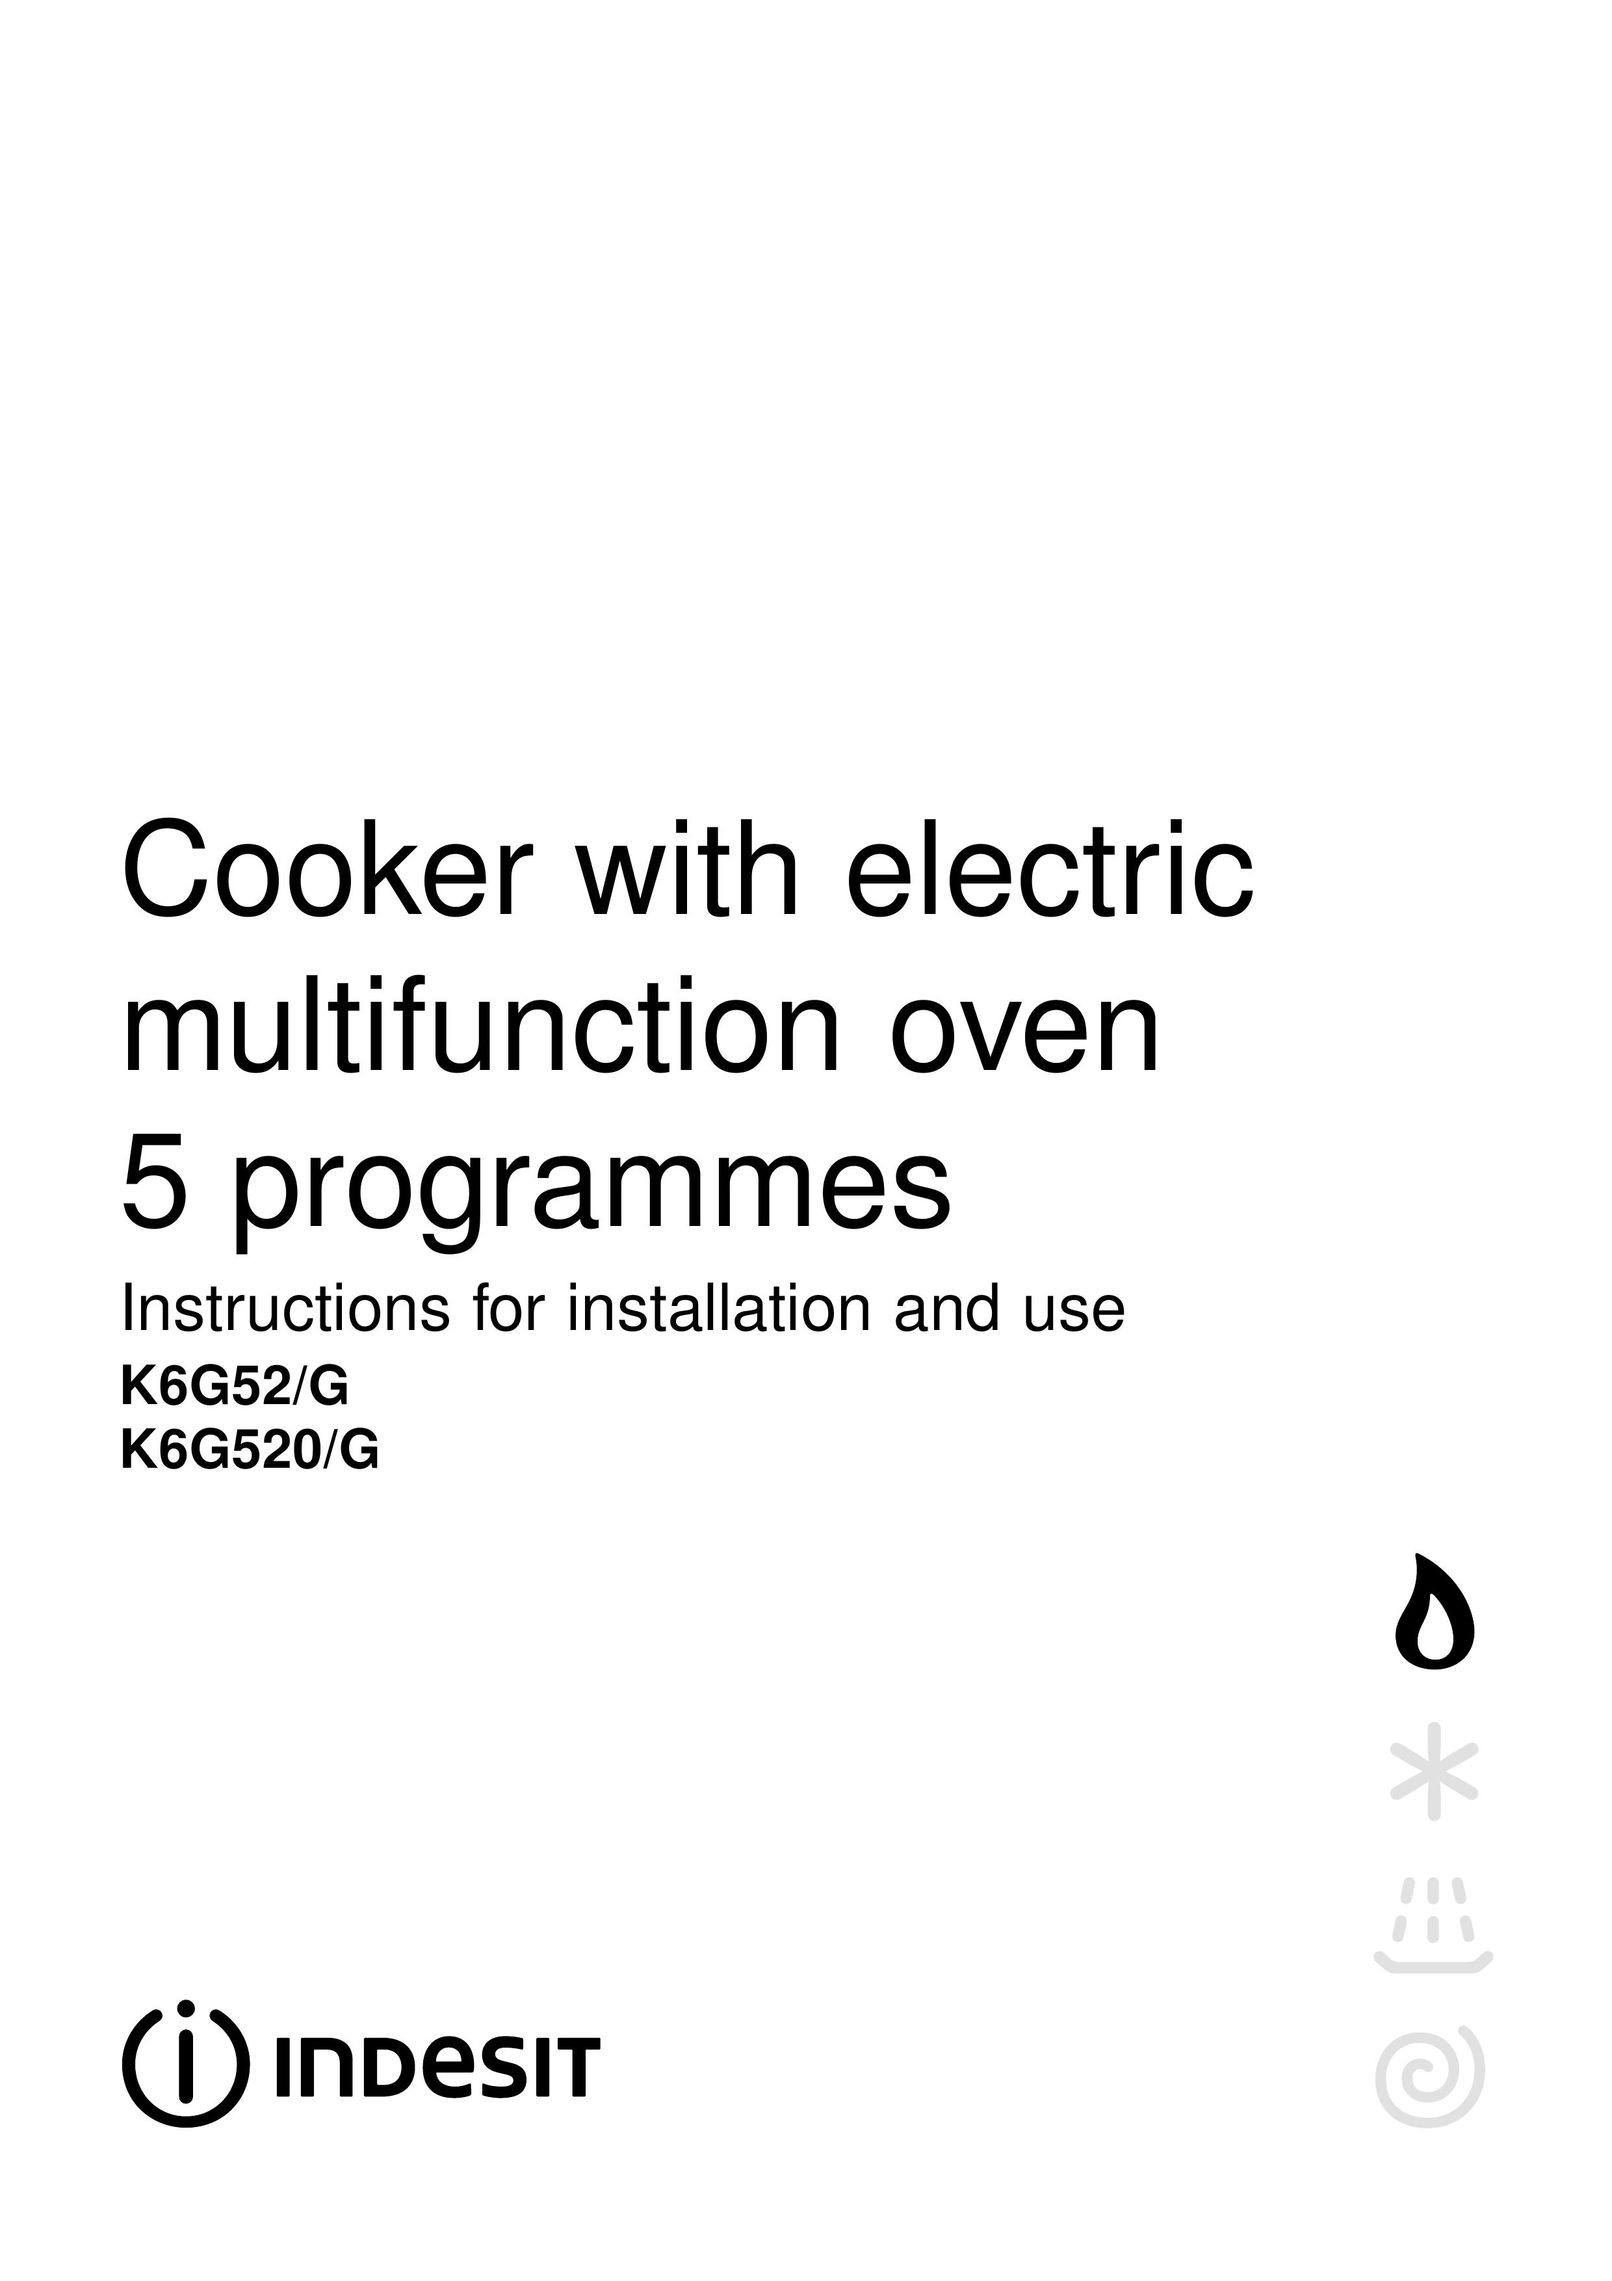 Indesit K6G520/G Cooktop User Manual